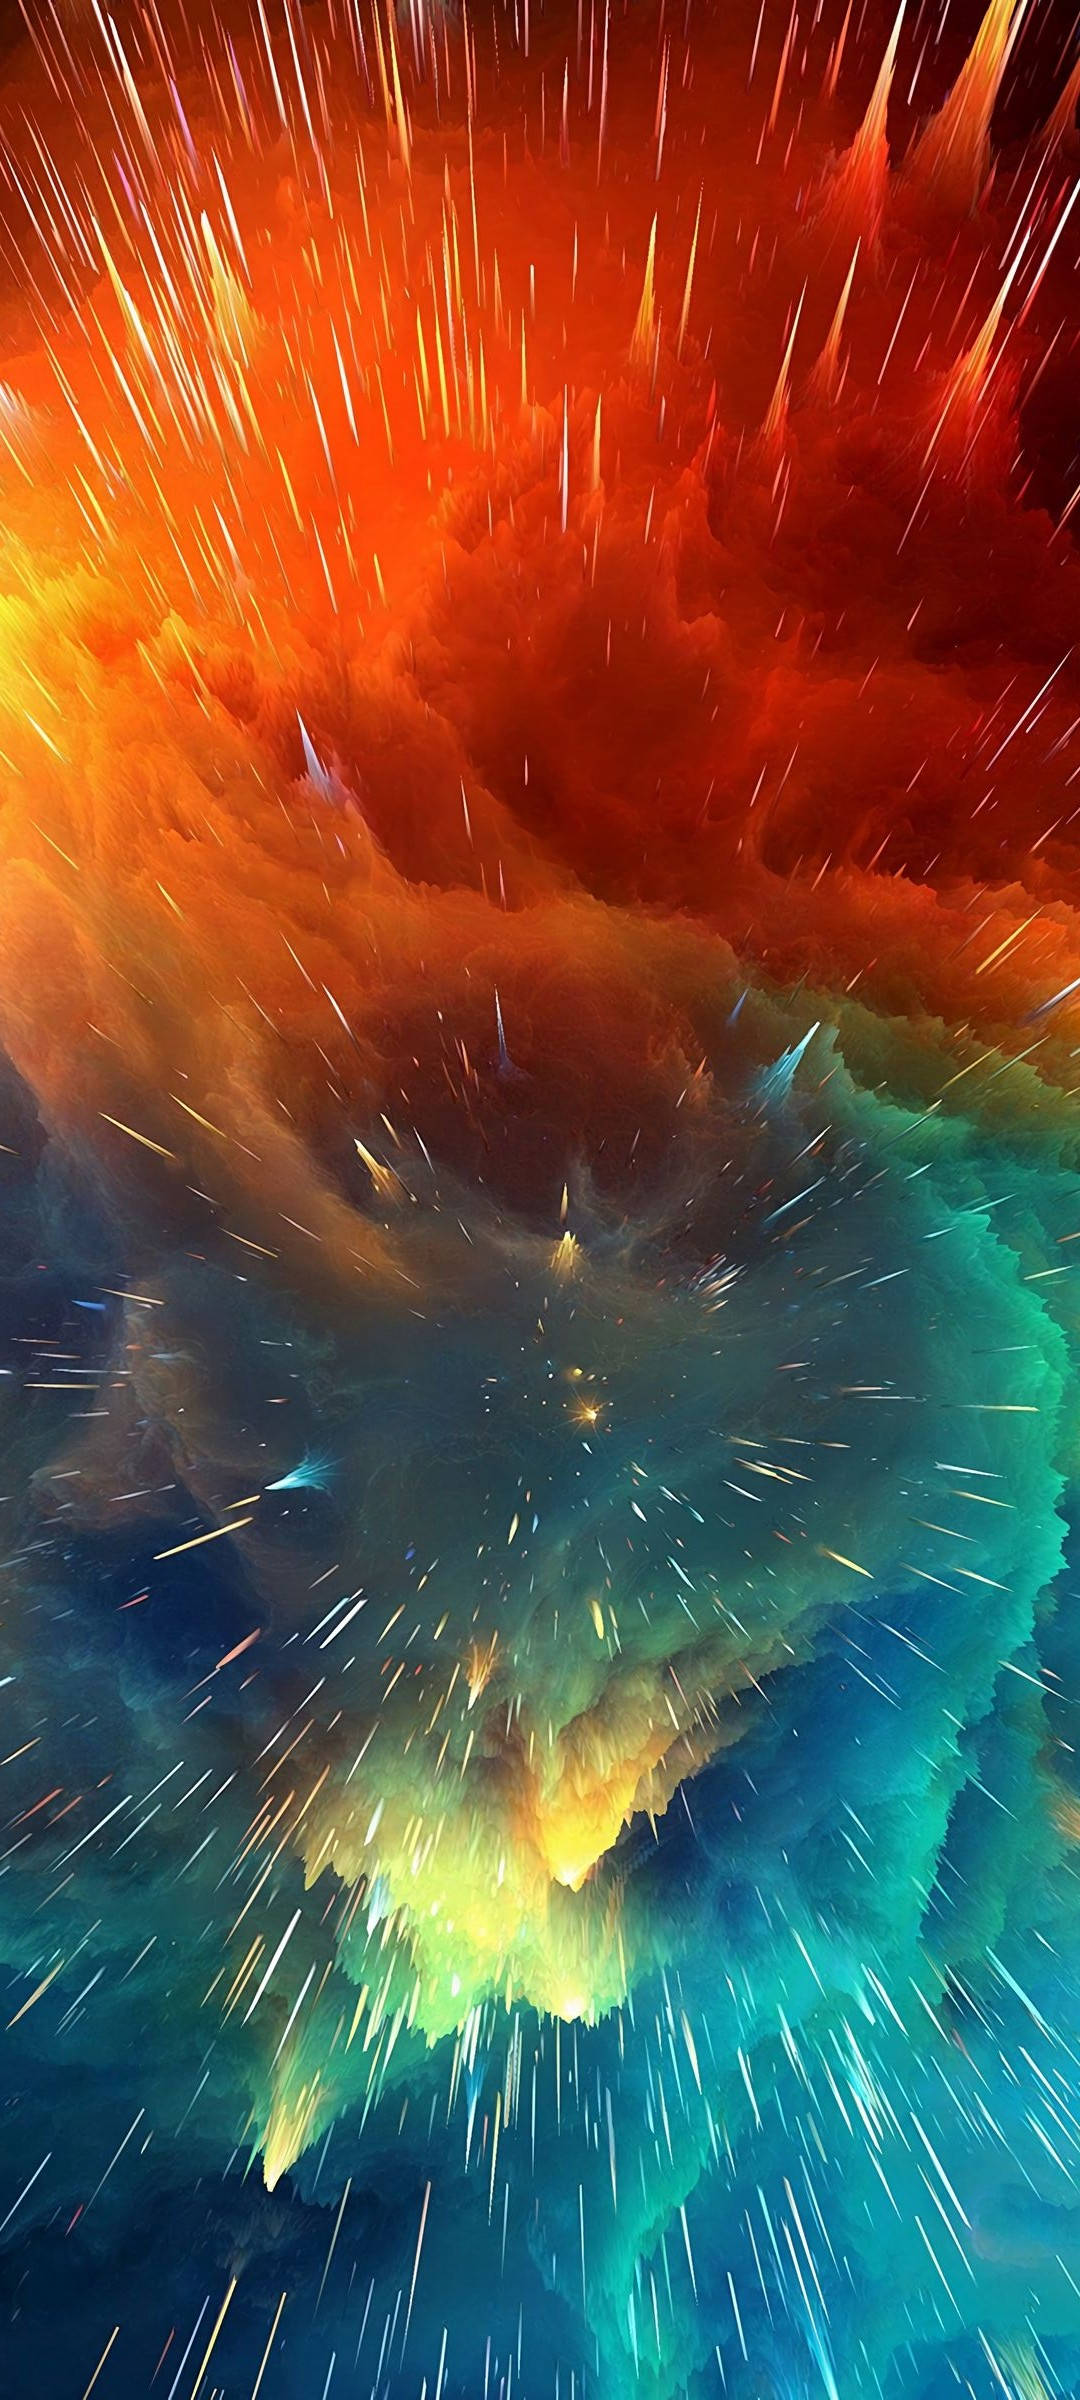 Blast of stars in Colorful Galaxy Wallpaper